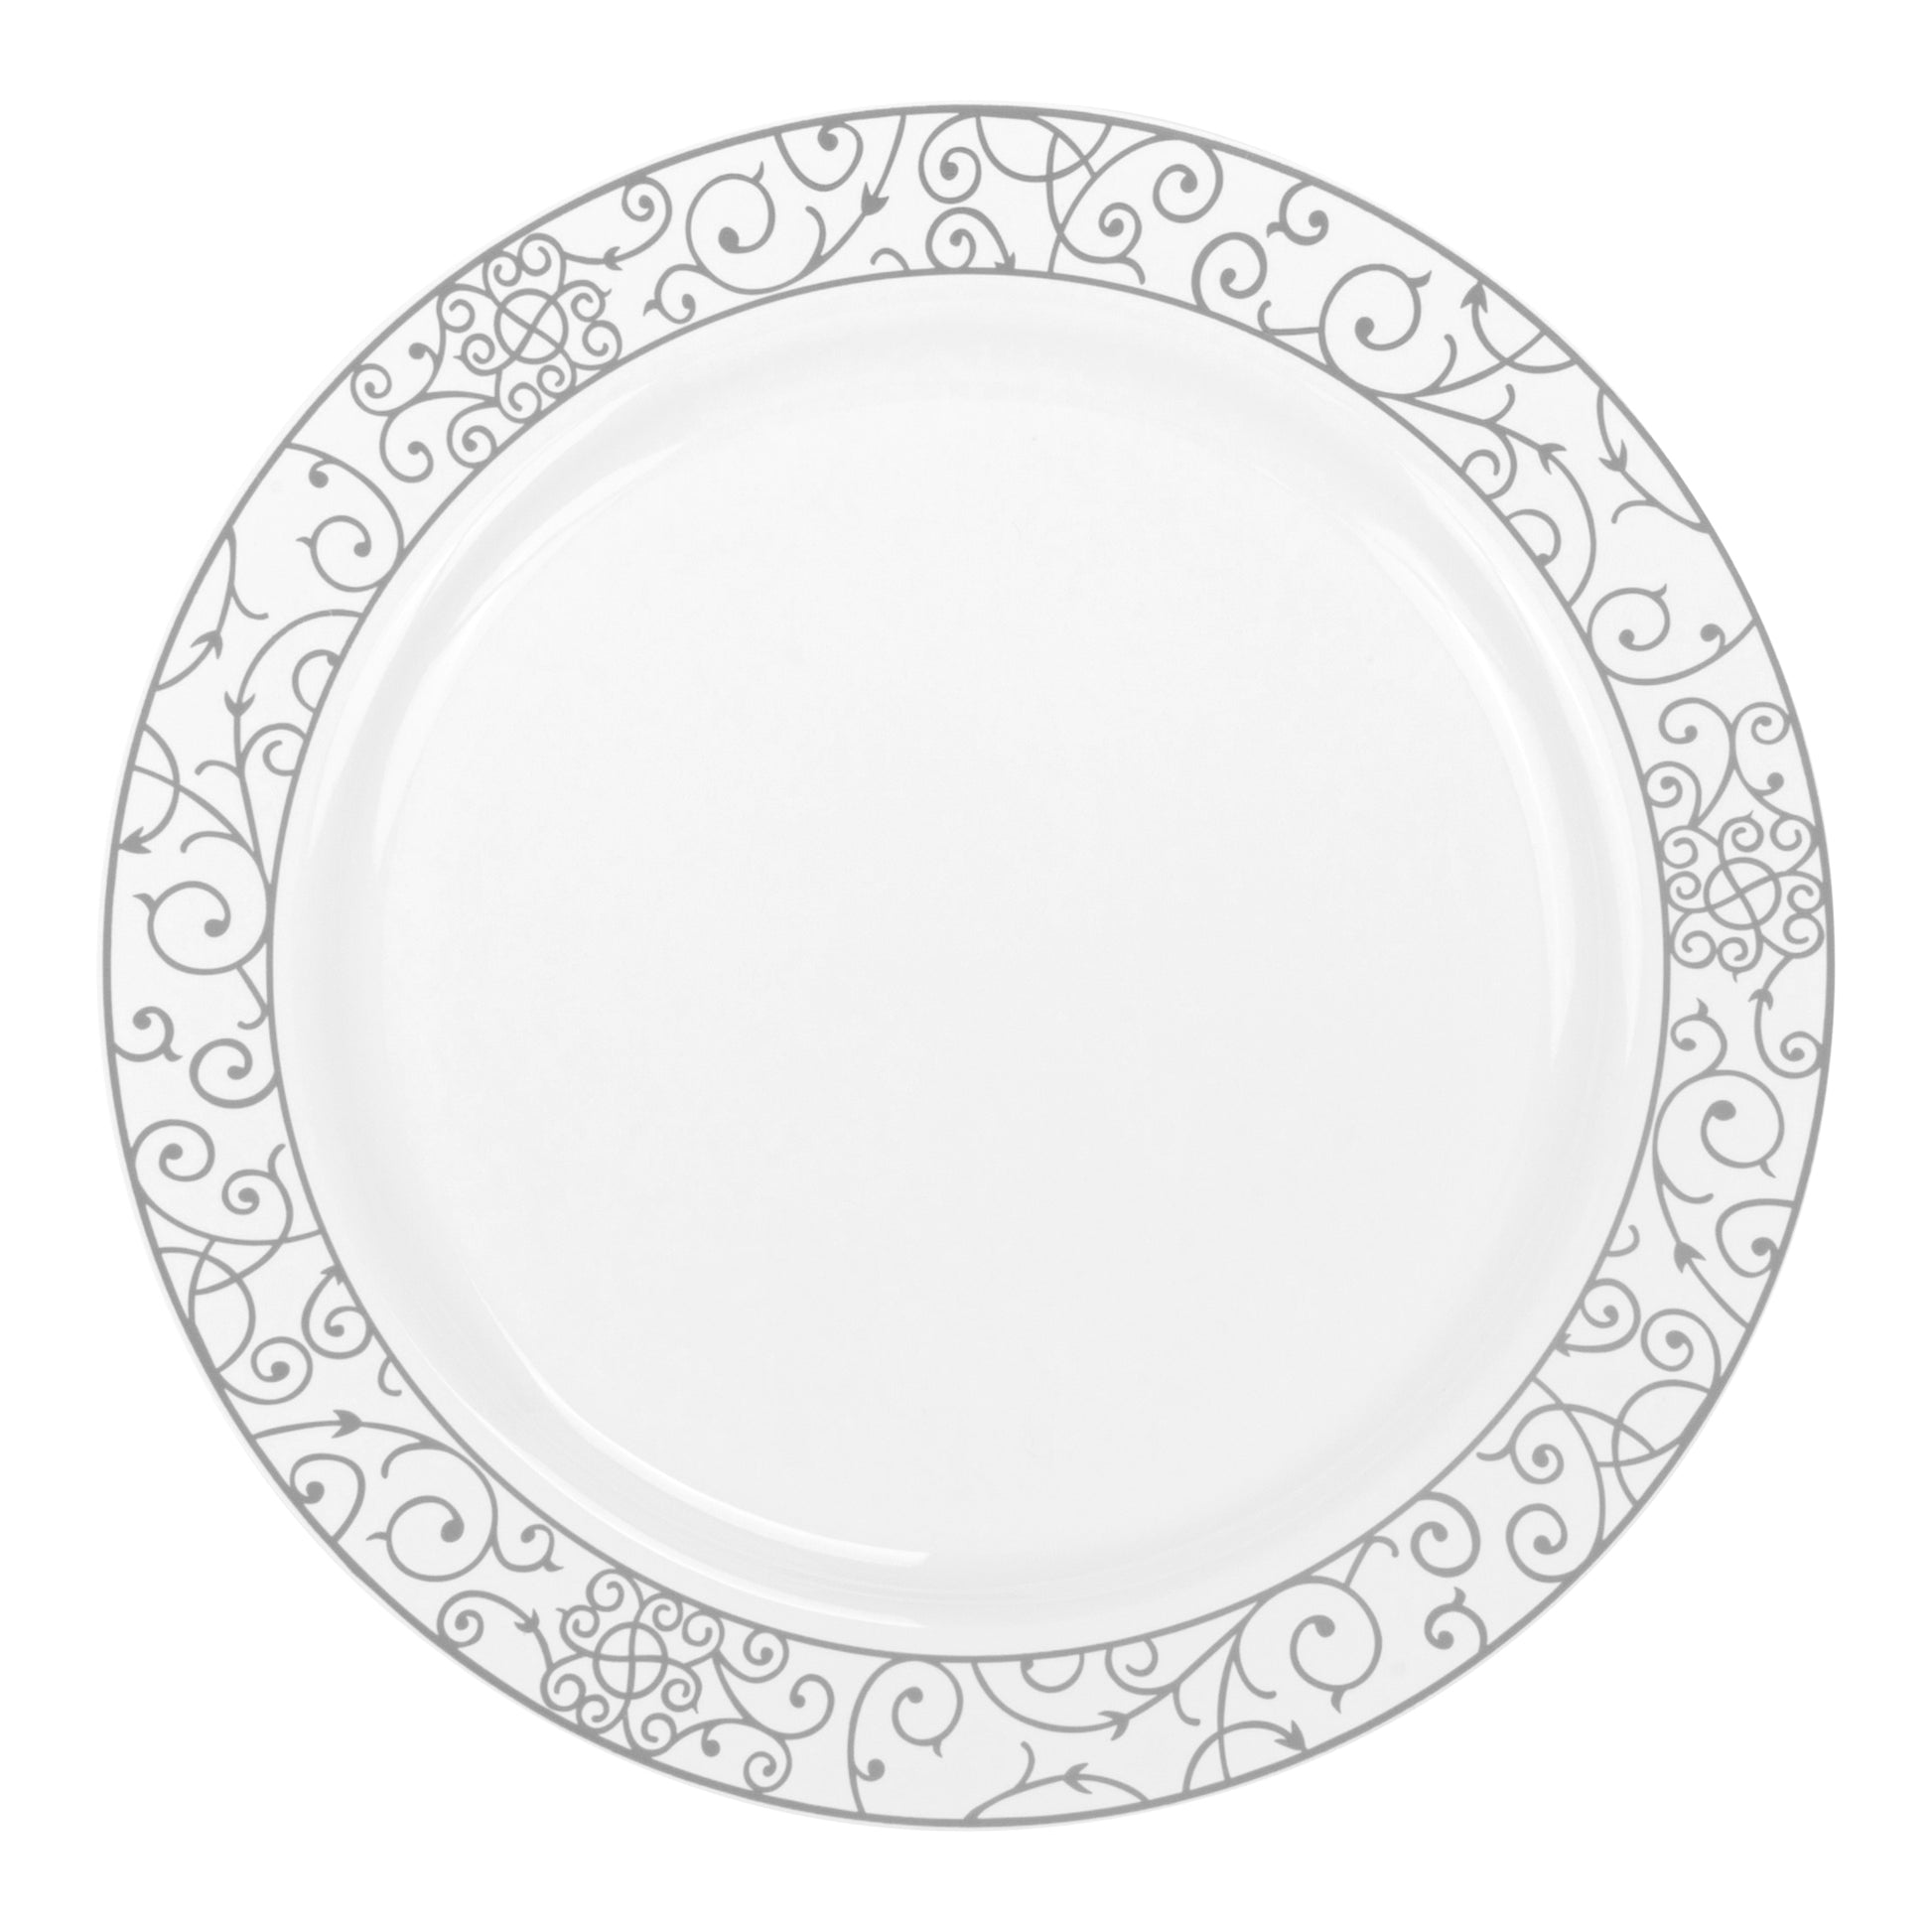 Venetian Disposable Plastic Plates 40 pcs Combo Pack - White Silver-Trimmed